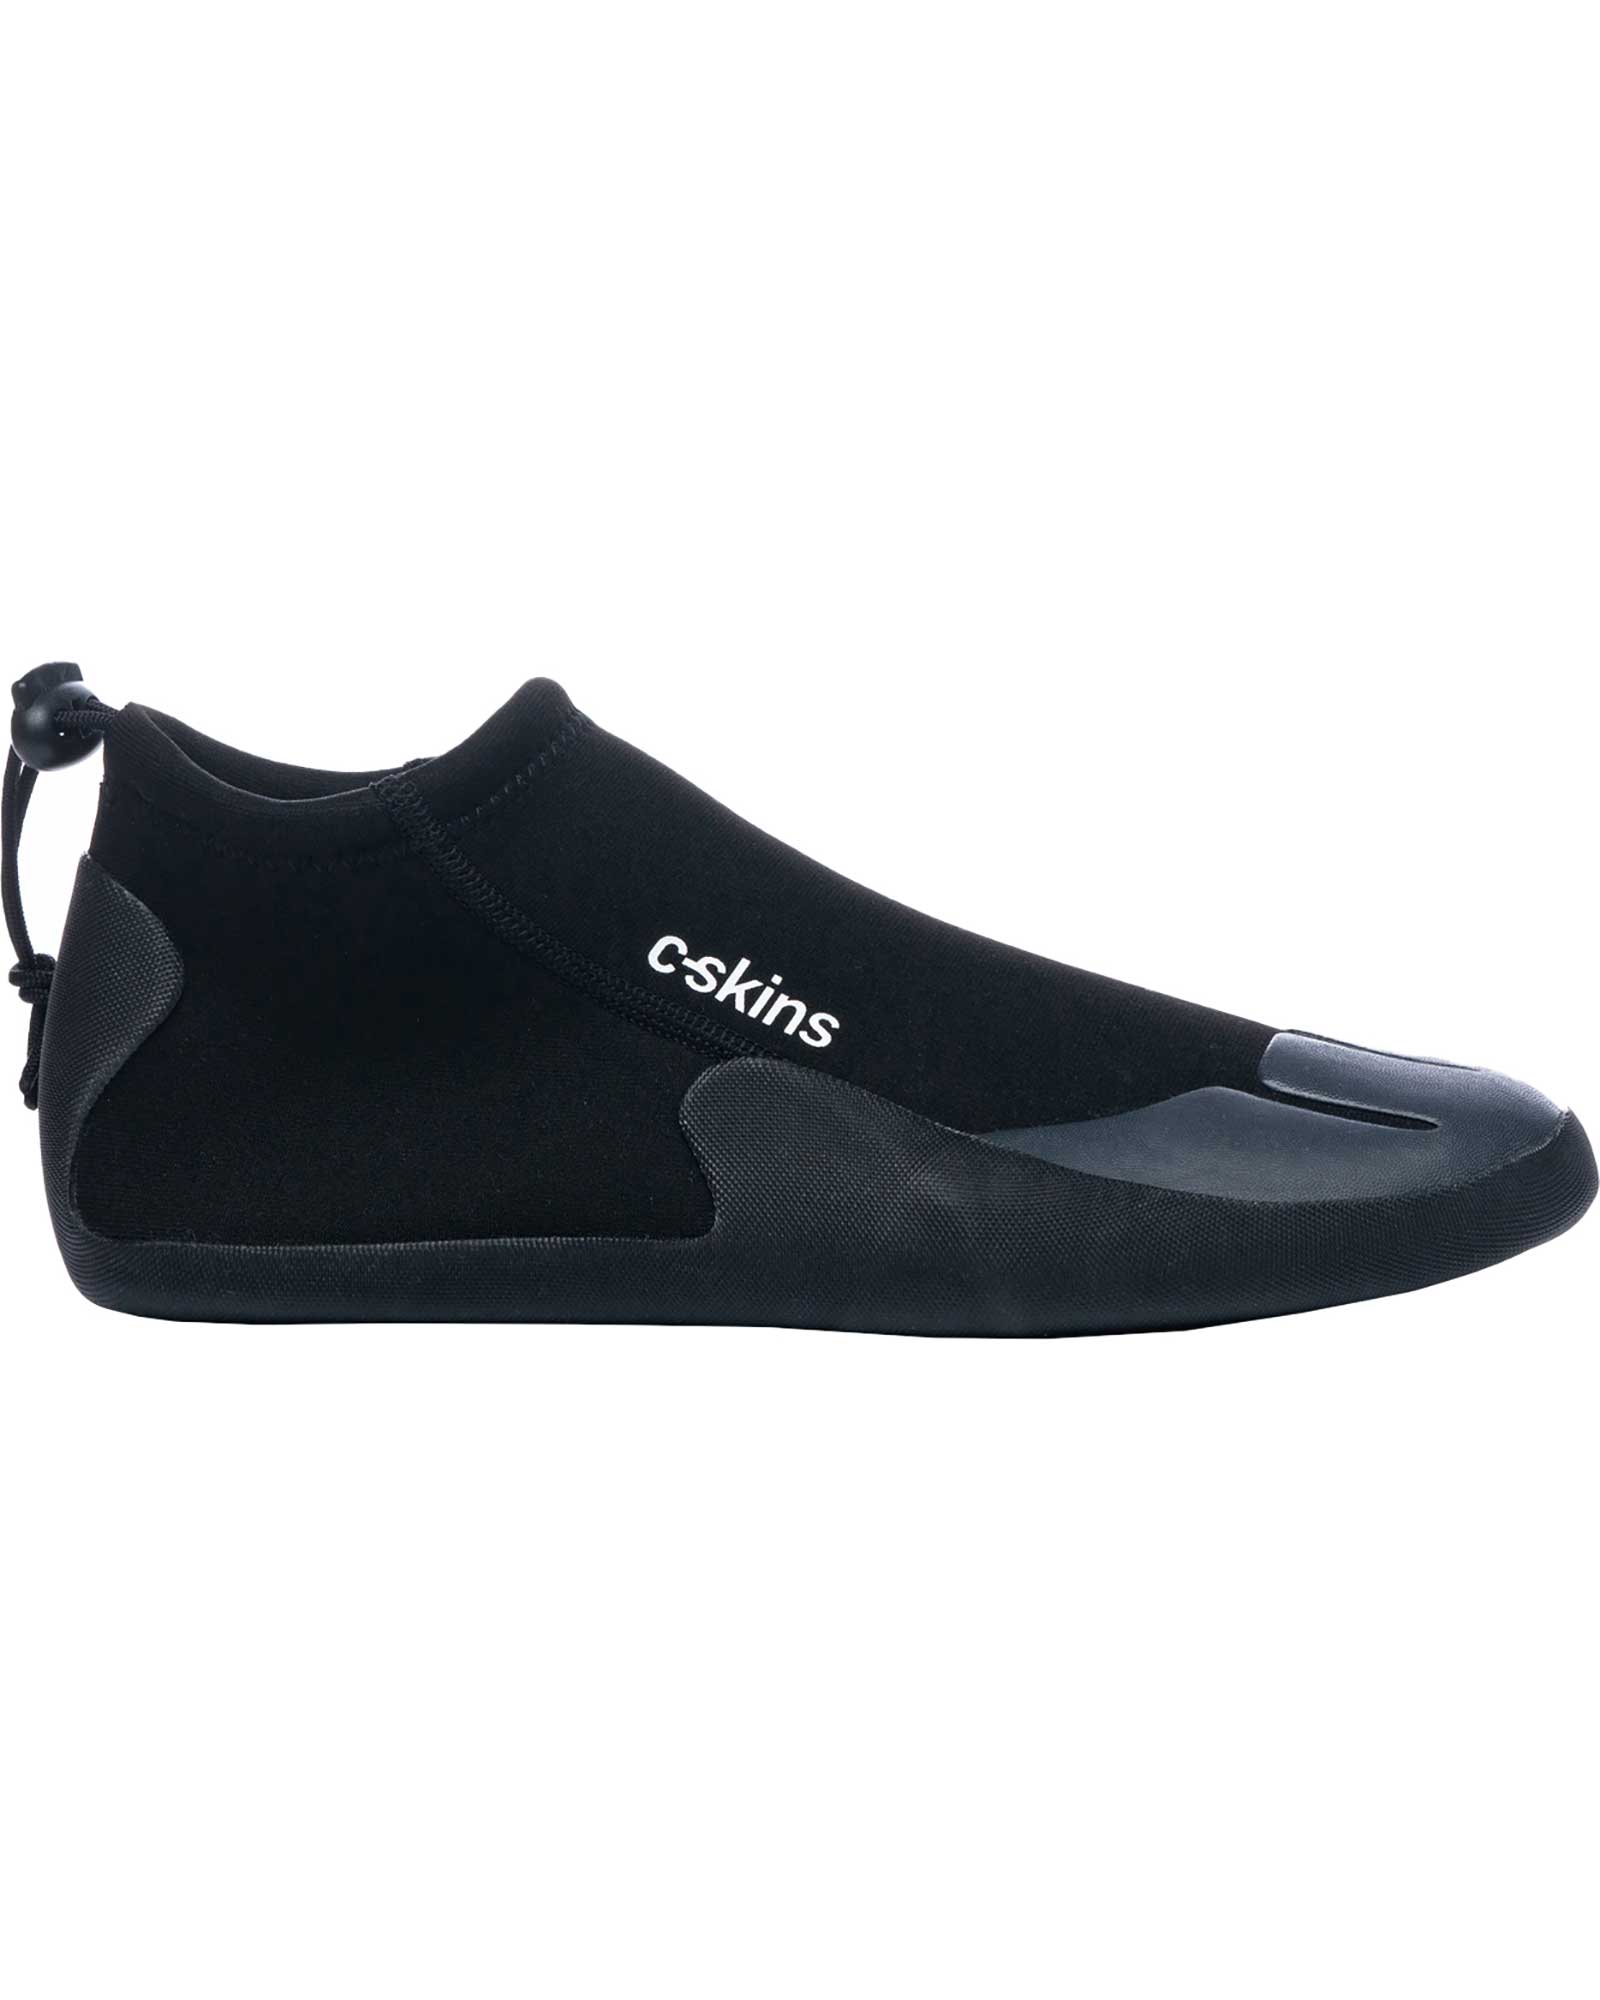 C Skins Legend 3mm Reef Boots - Black/Charcoal UK 8